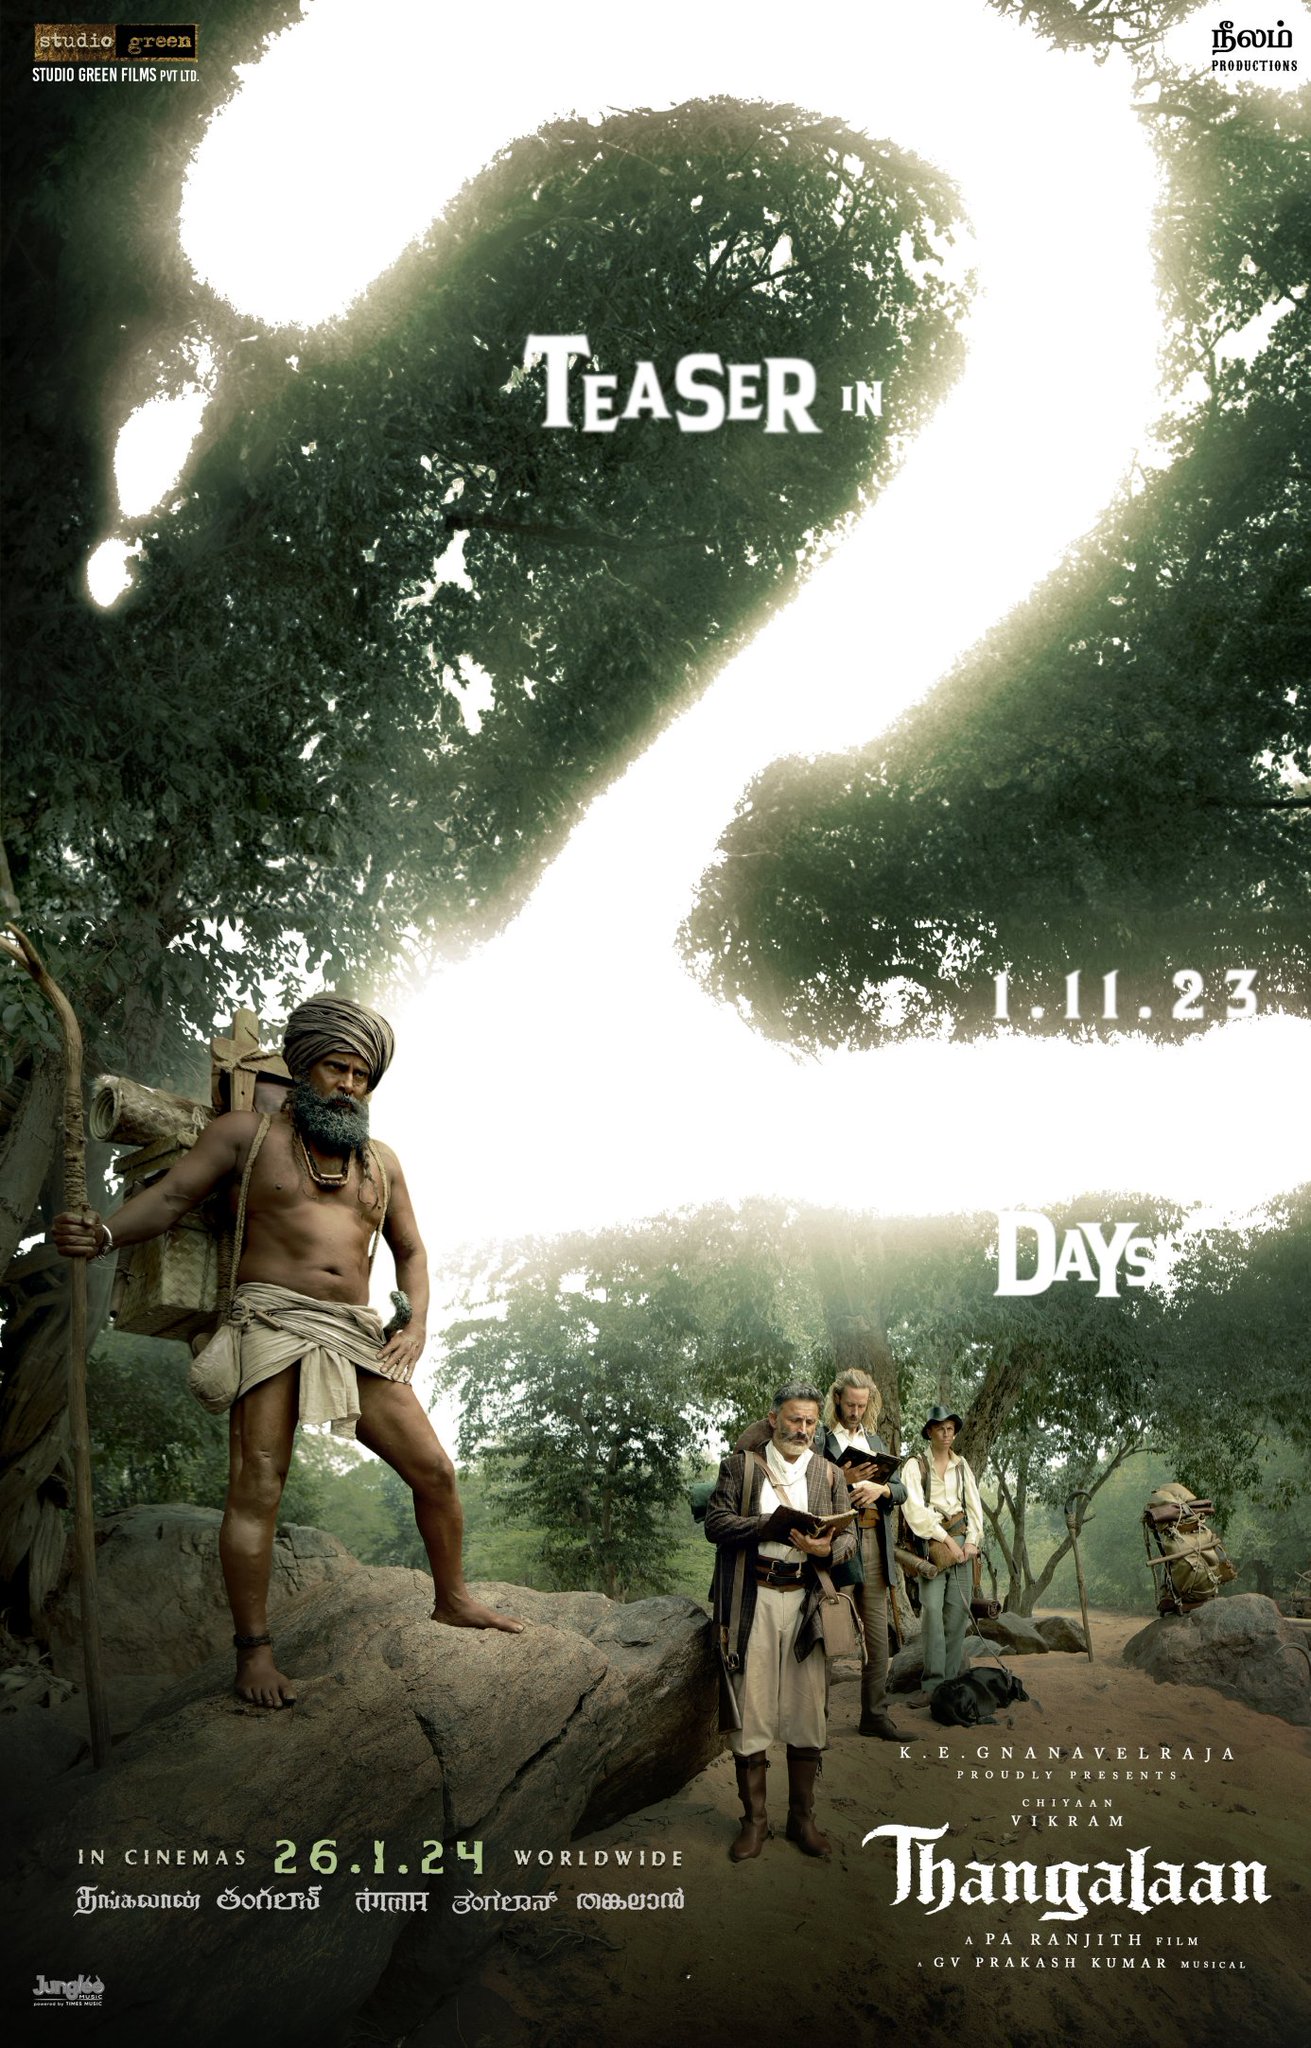 Thangalaan Teaser 2 days to go | Chiyaan Vikram | Pa Ranjith